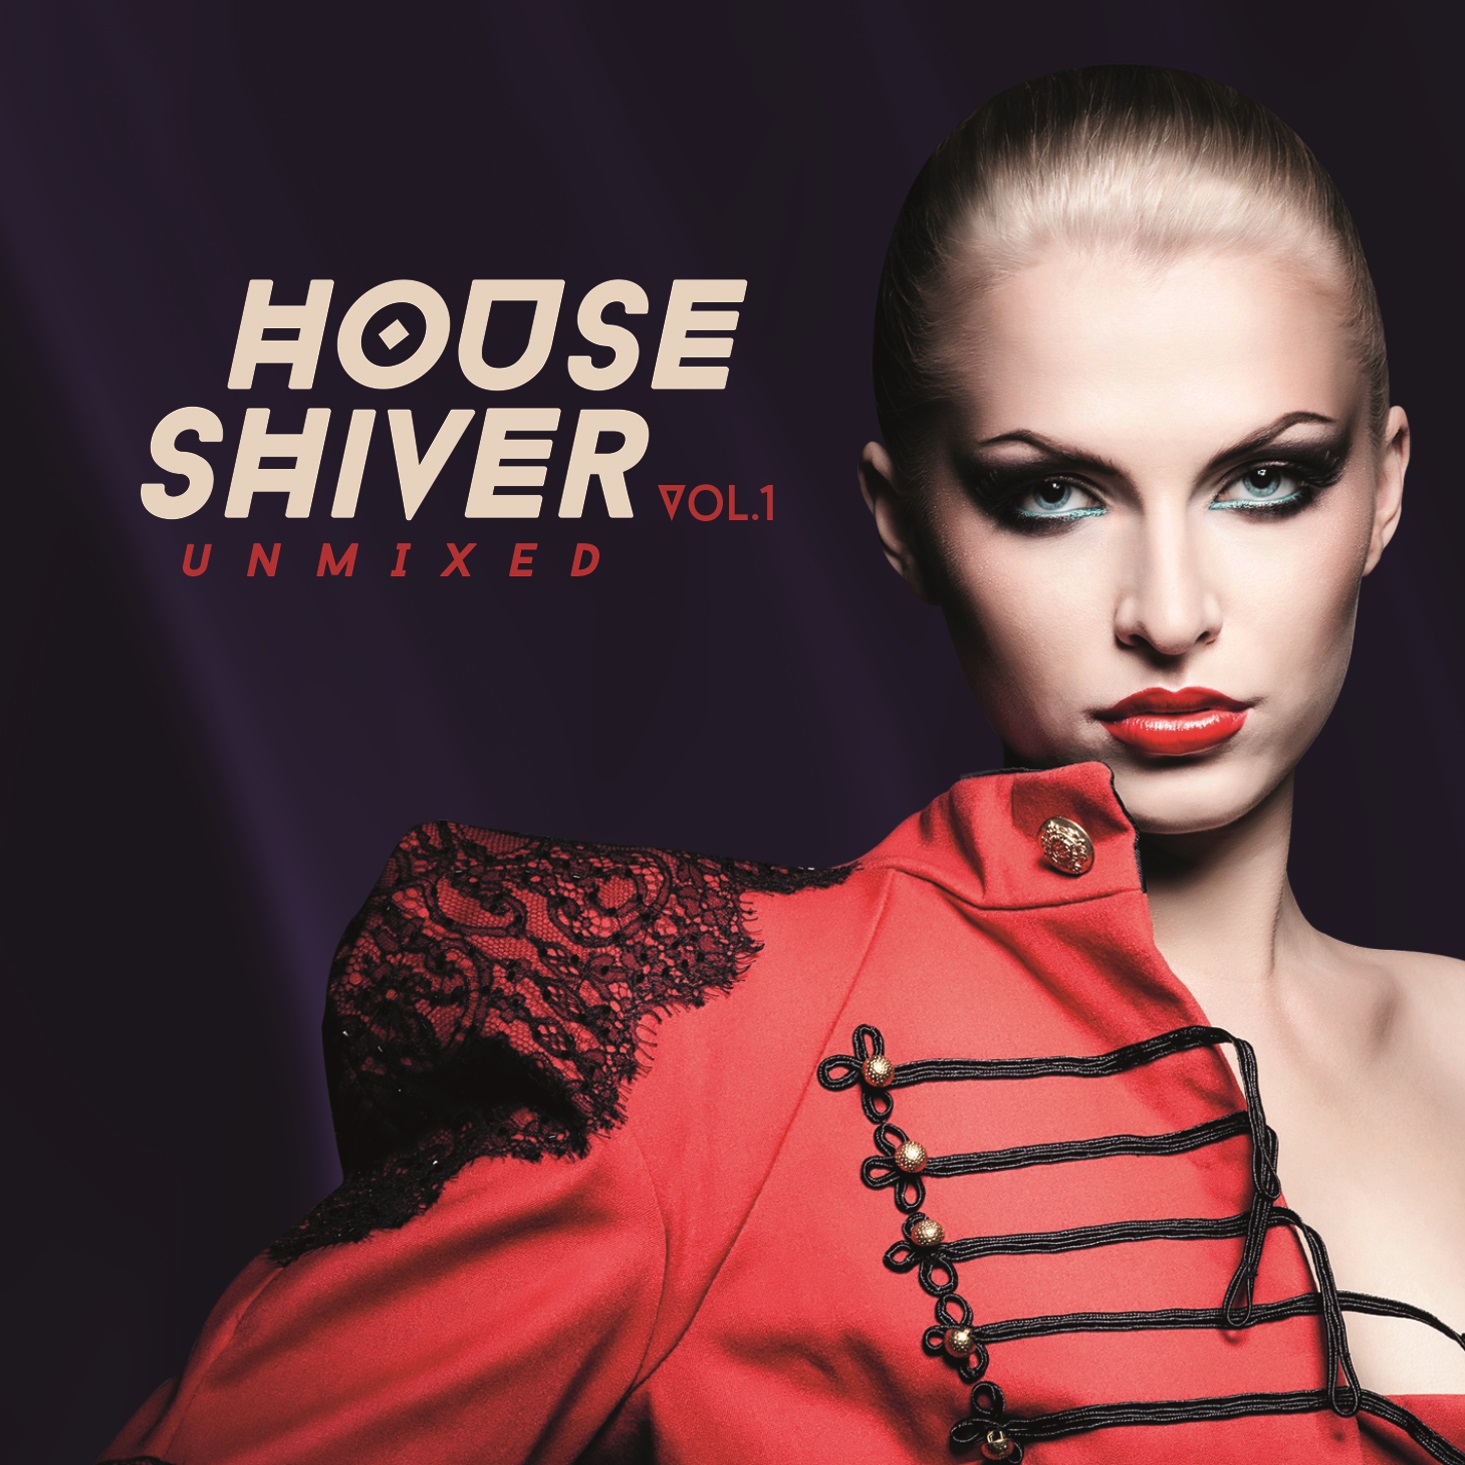 House Shiver vol. 1